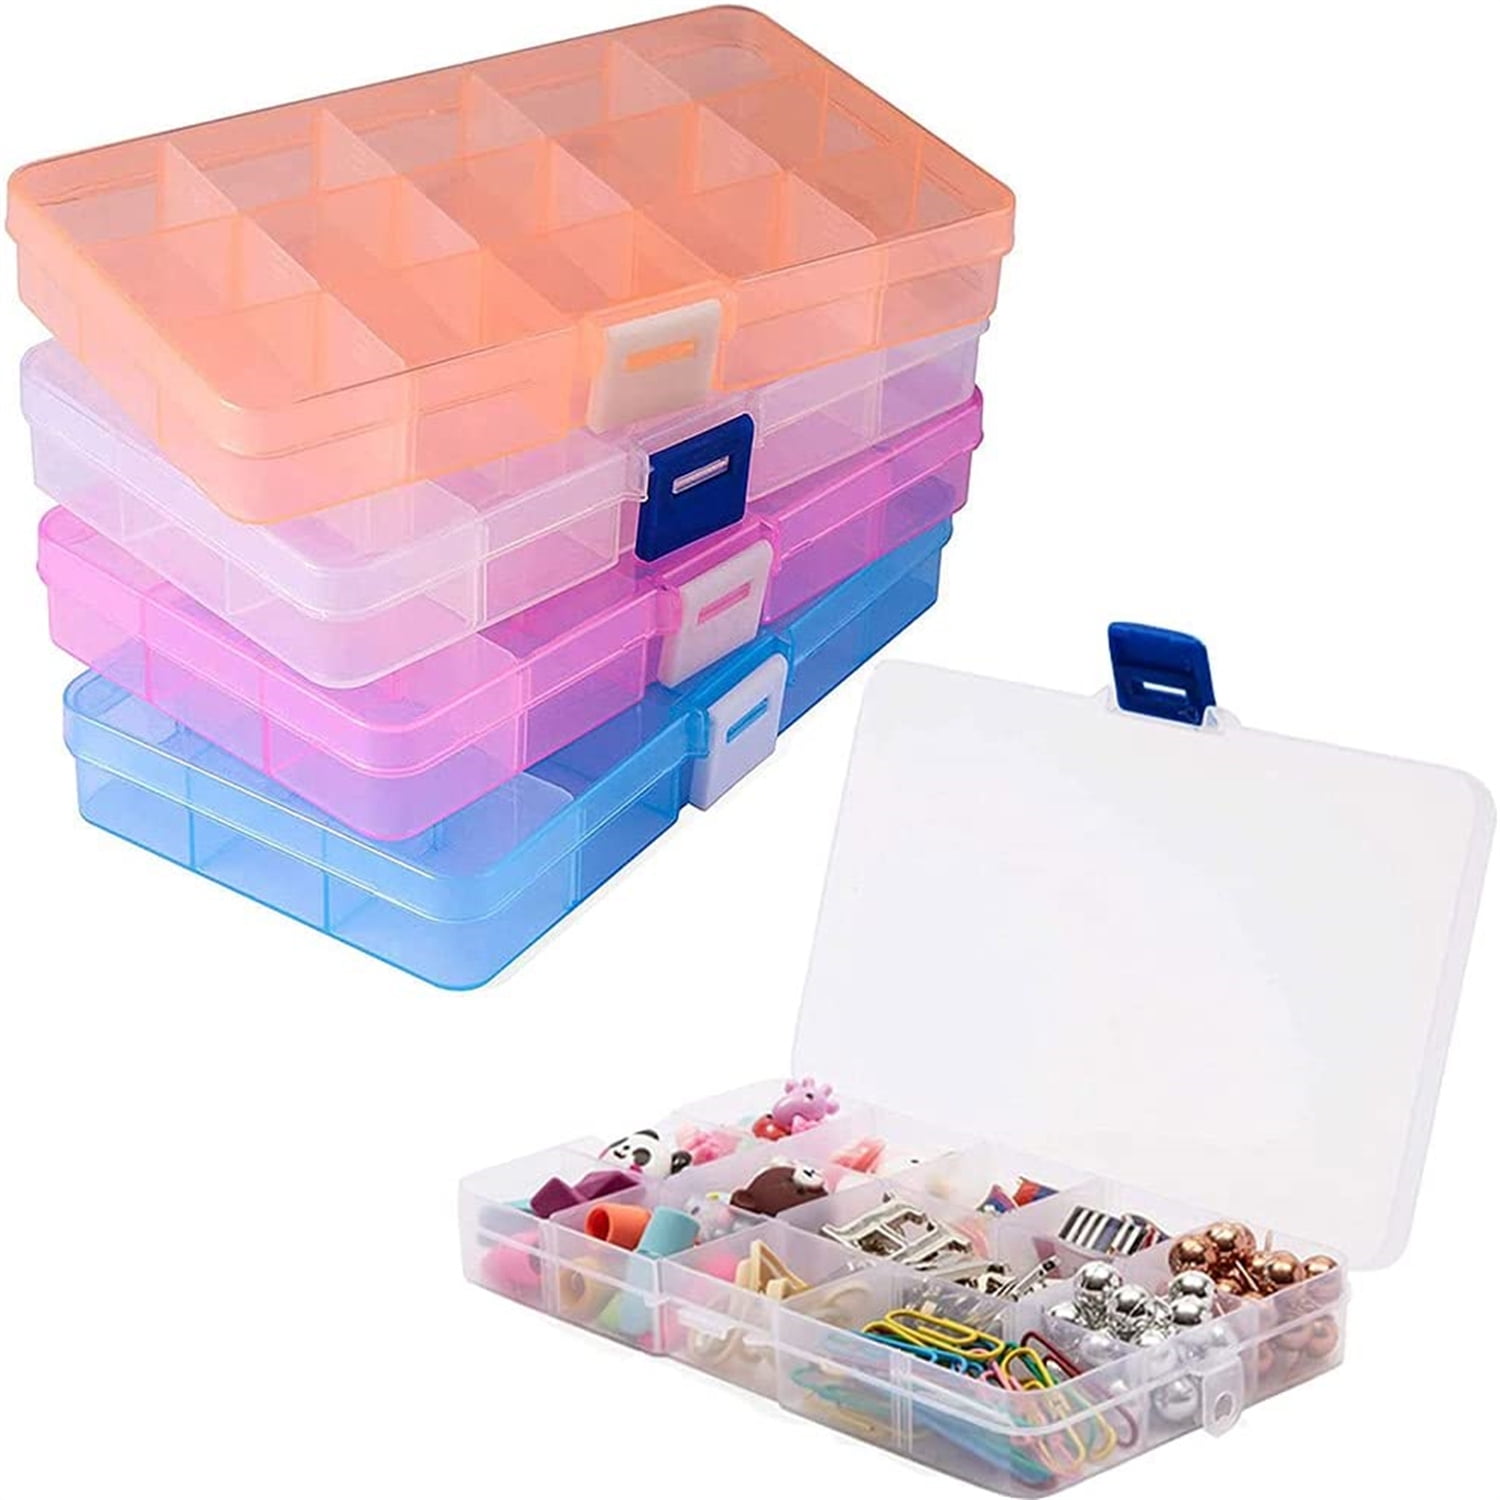 4 Pieces Plastic Jewelry Box, Clear Plastic Jewelry Box, Sort Boxes